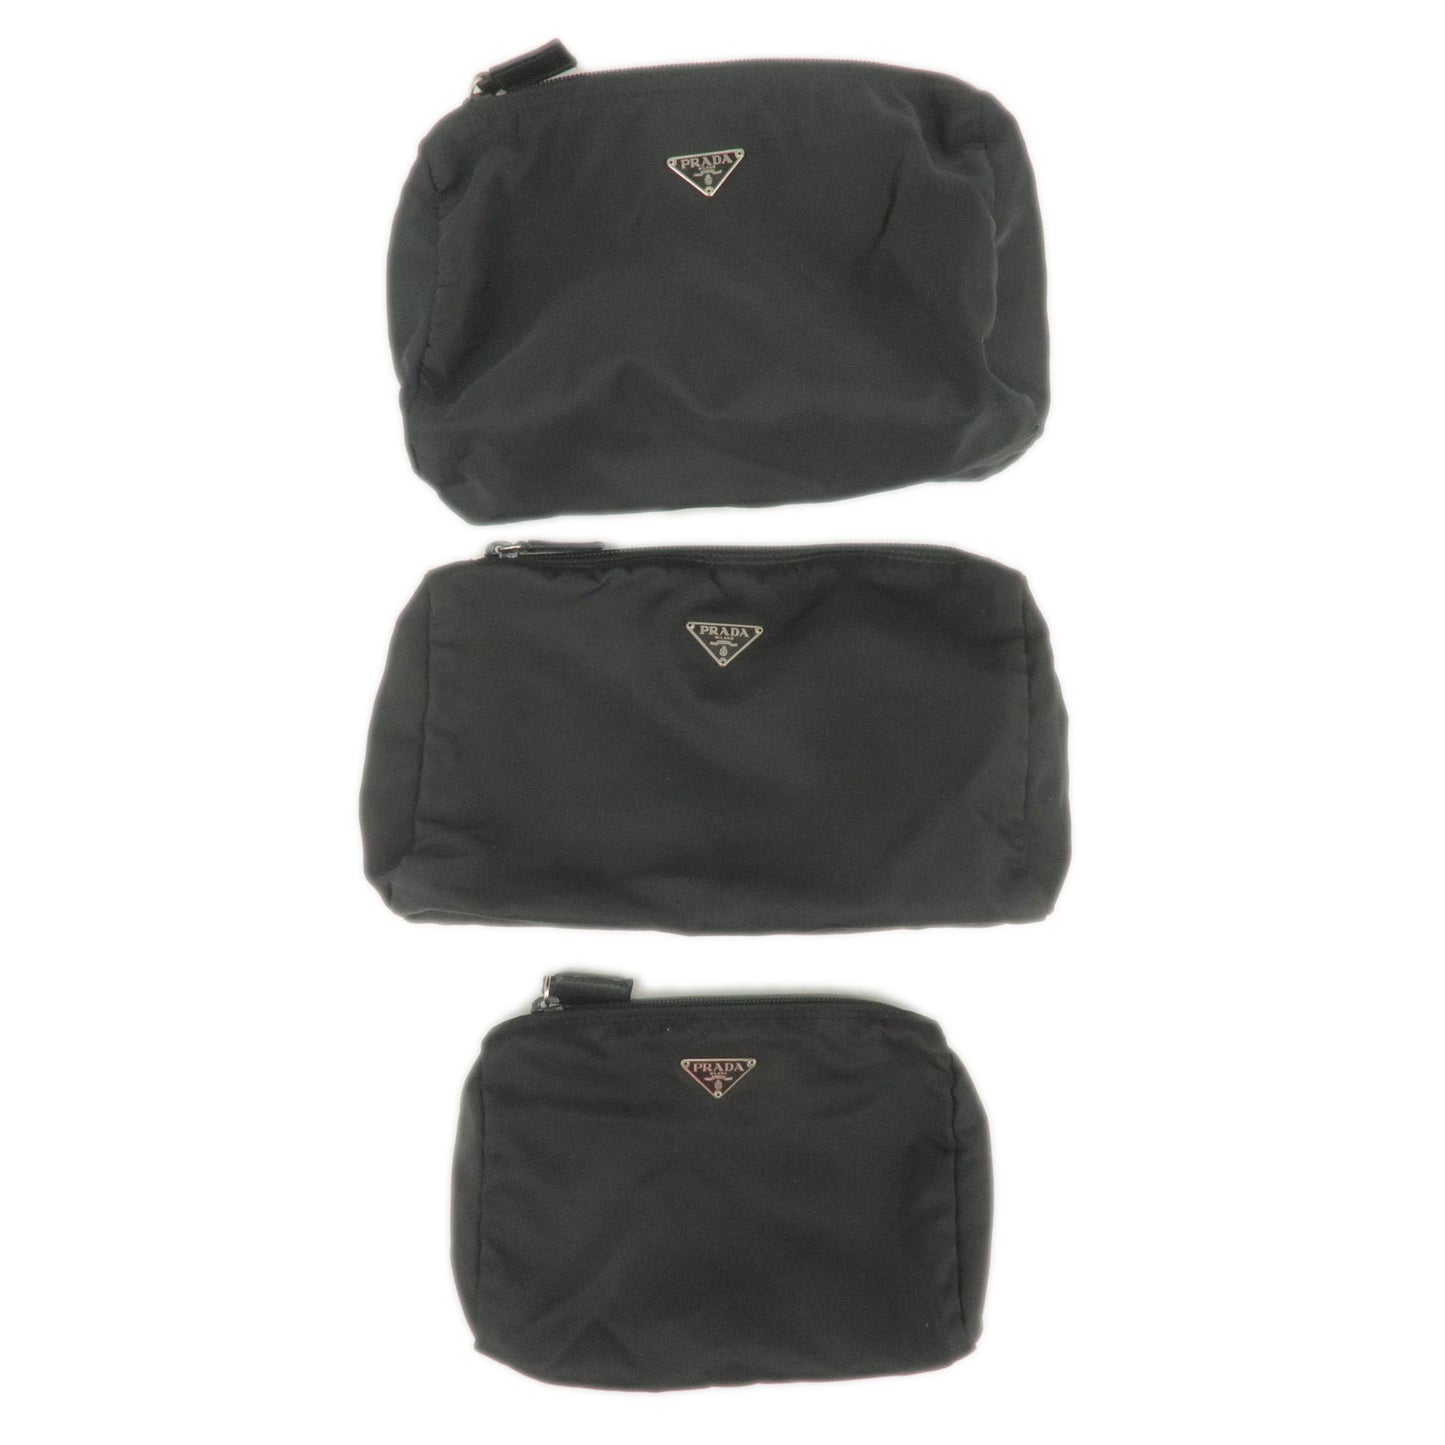 PRADA-Set-of-3-Logo-Nylon-Cosmetic-Pouch-Clutch-Bag-NERO-Black		